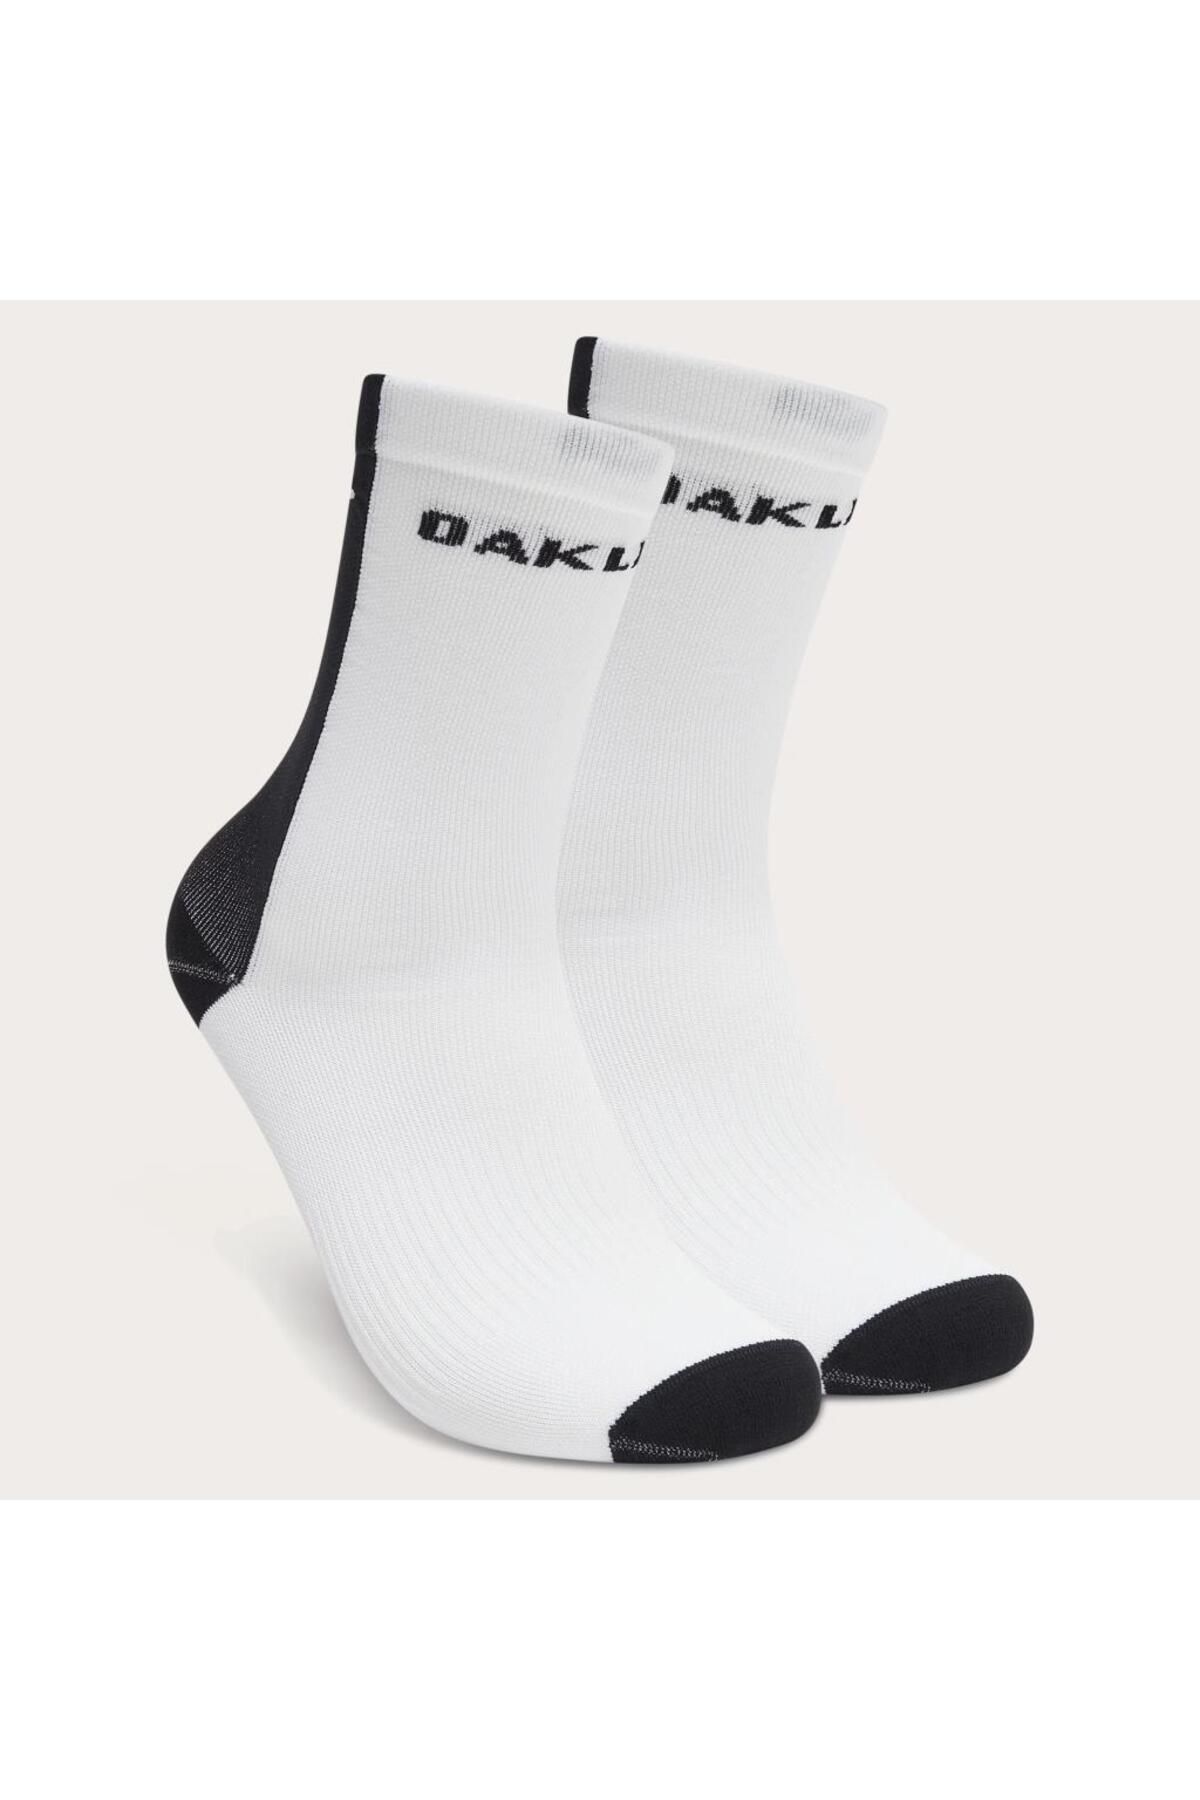 Oakley Icon Road Short Socks Kısa Bisiklet Çorabı FOS901235 104 White Black